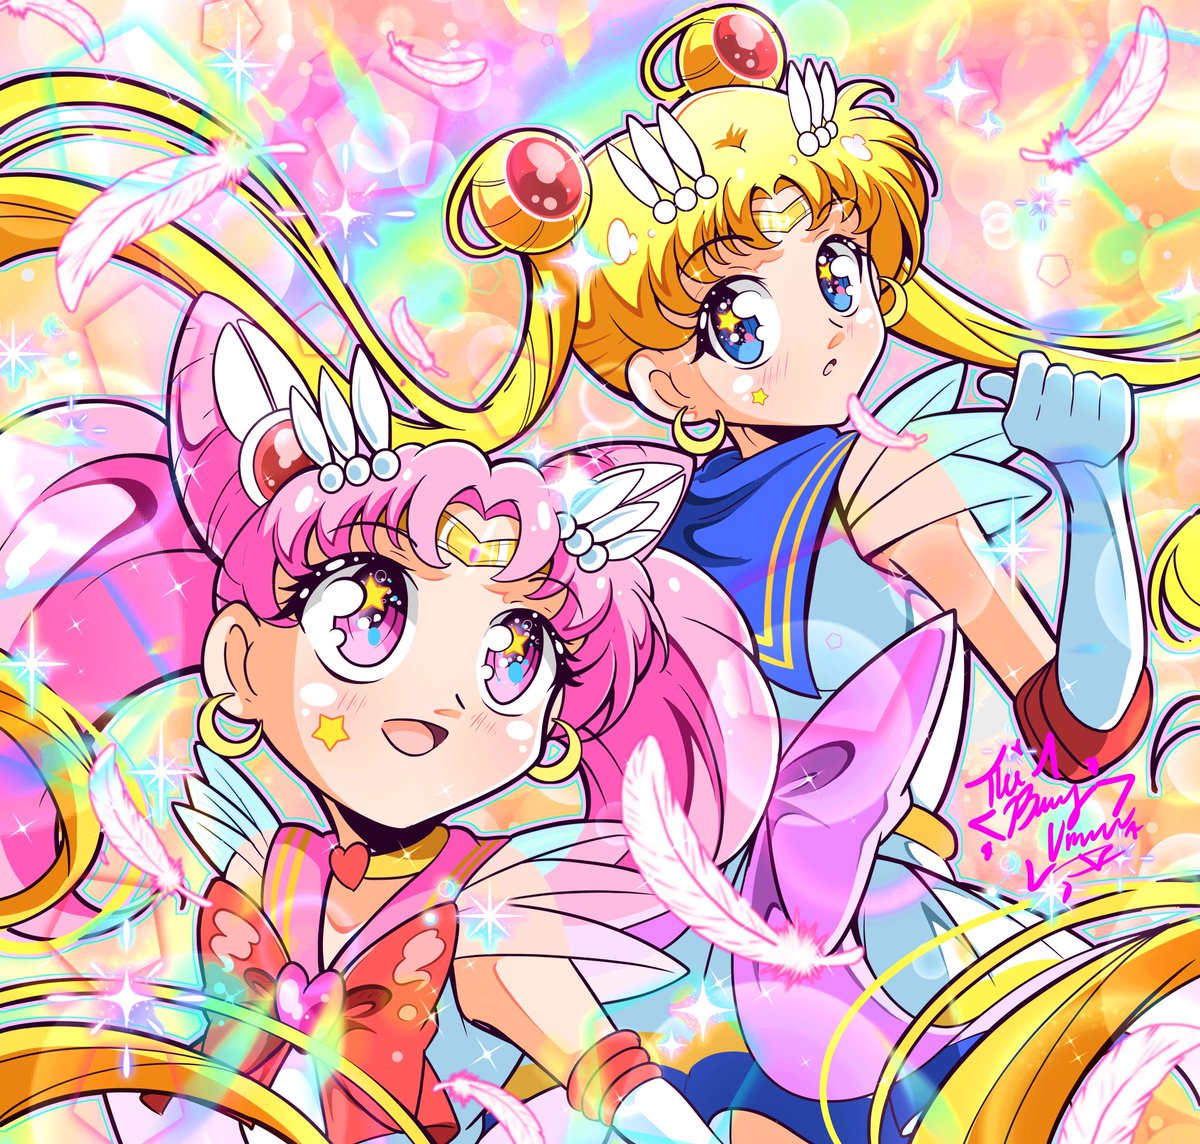 Sailor moon and sailor chibi moon redrawing 
#イラスト #SailorMoon #SailorMoonCosmos #セーラームーン #sailormoonredraw